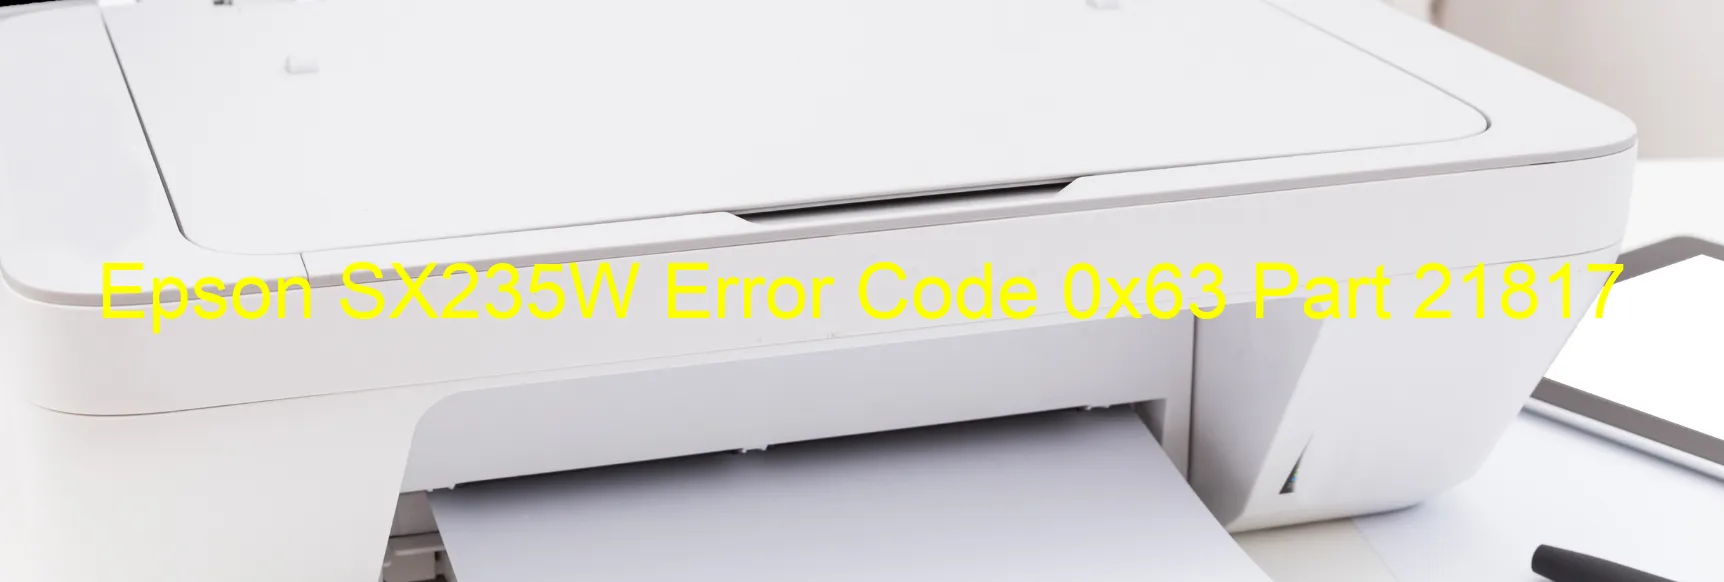 Epson SX235W Error 0x63